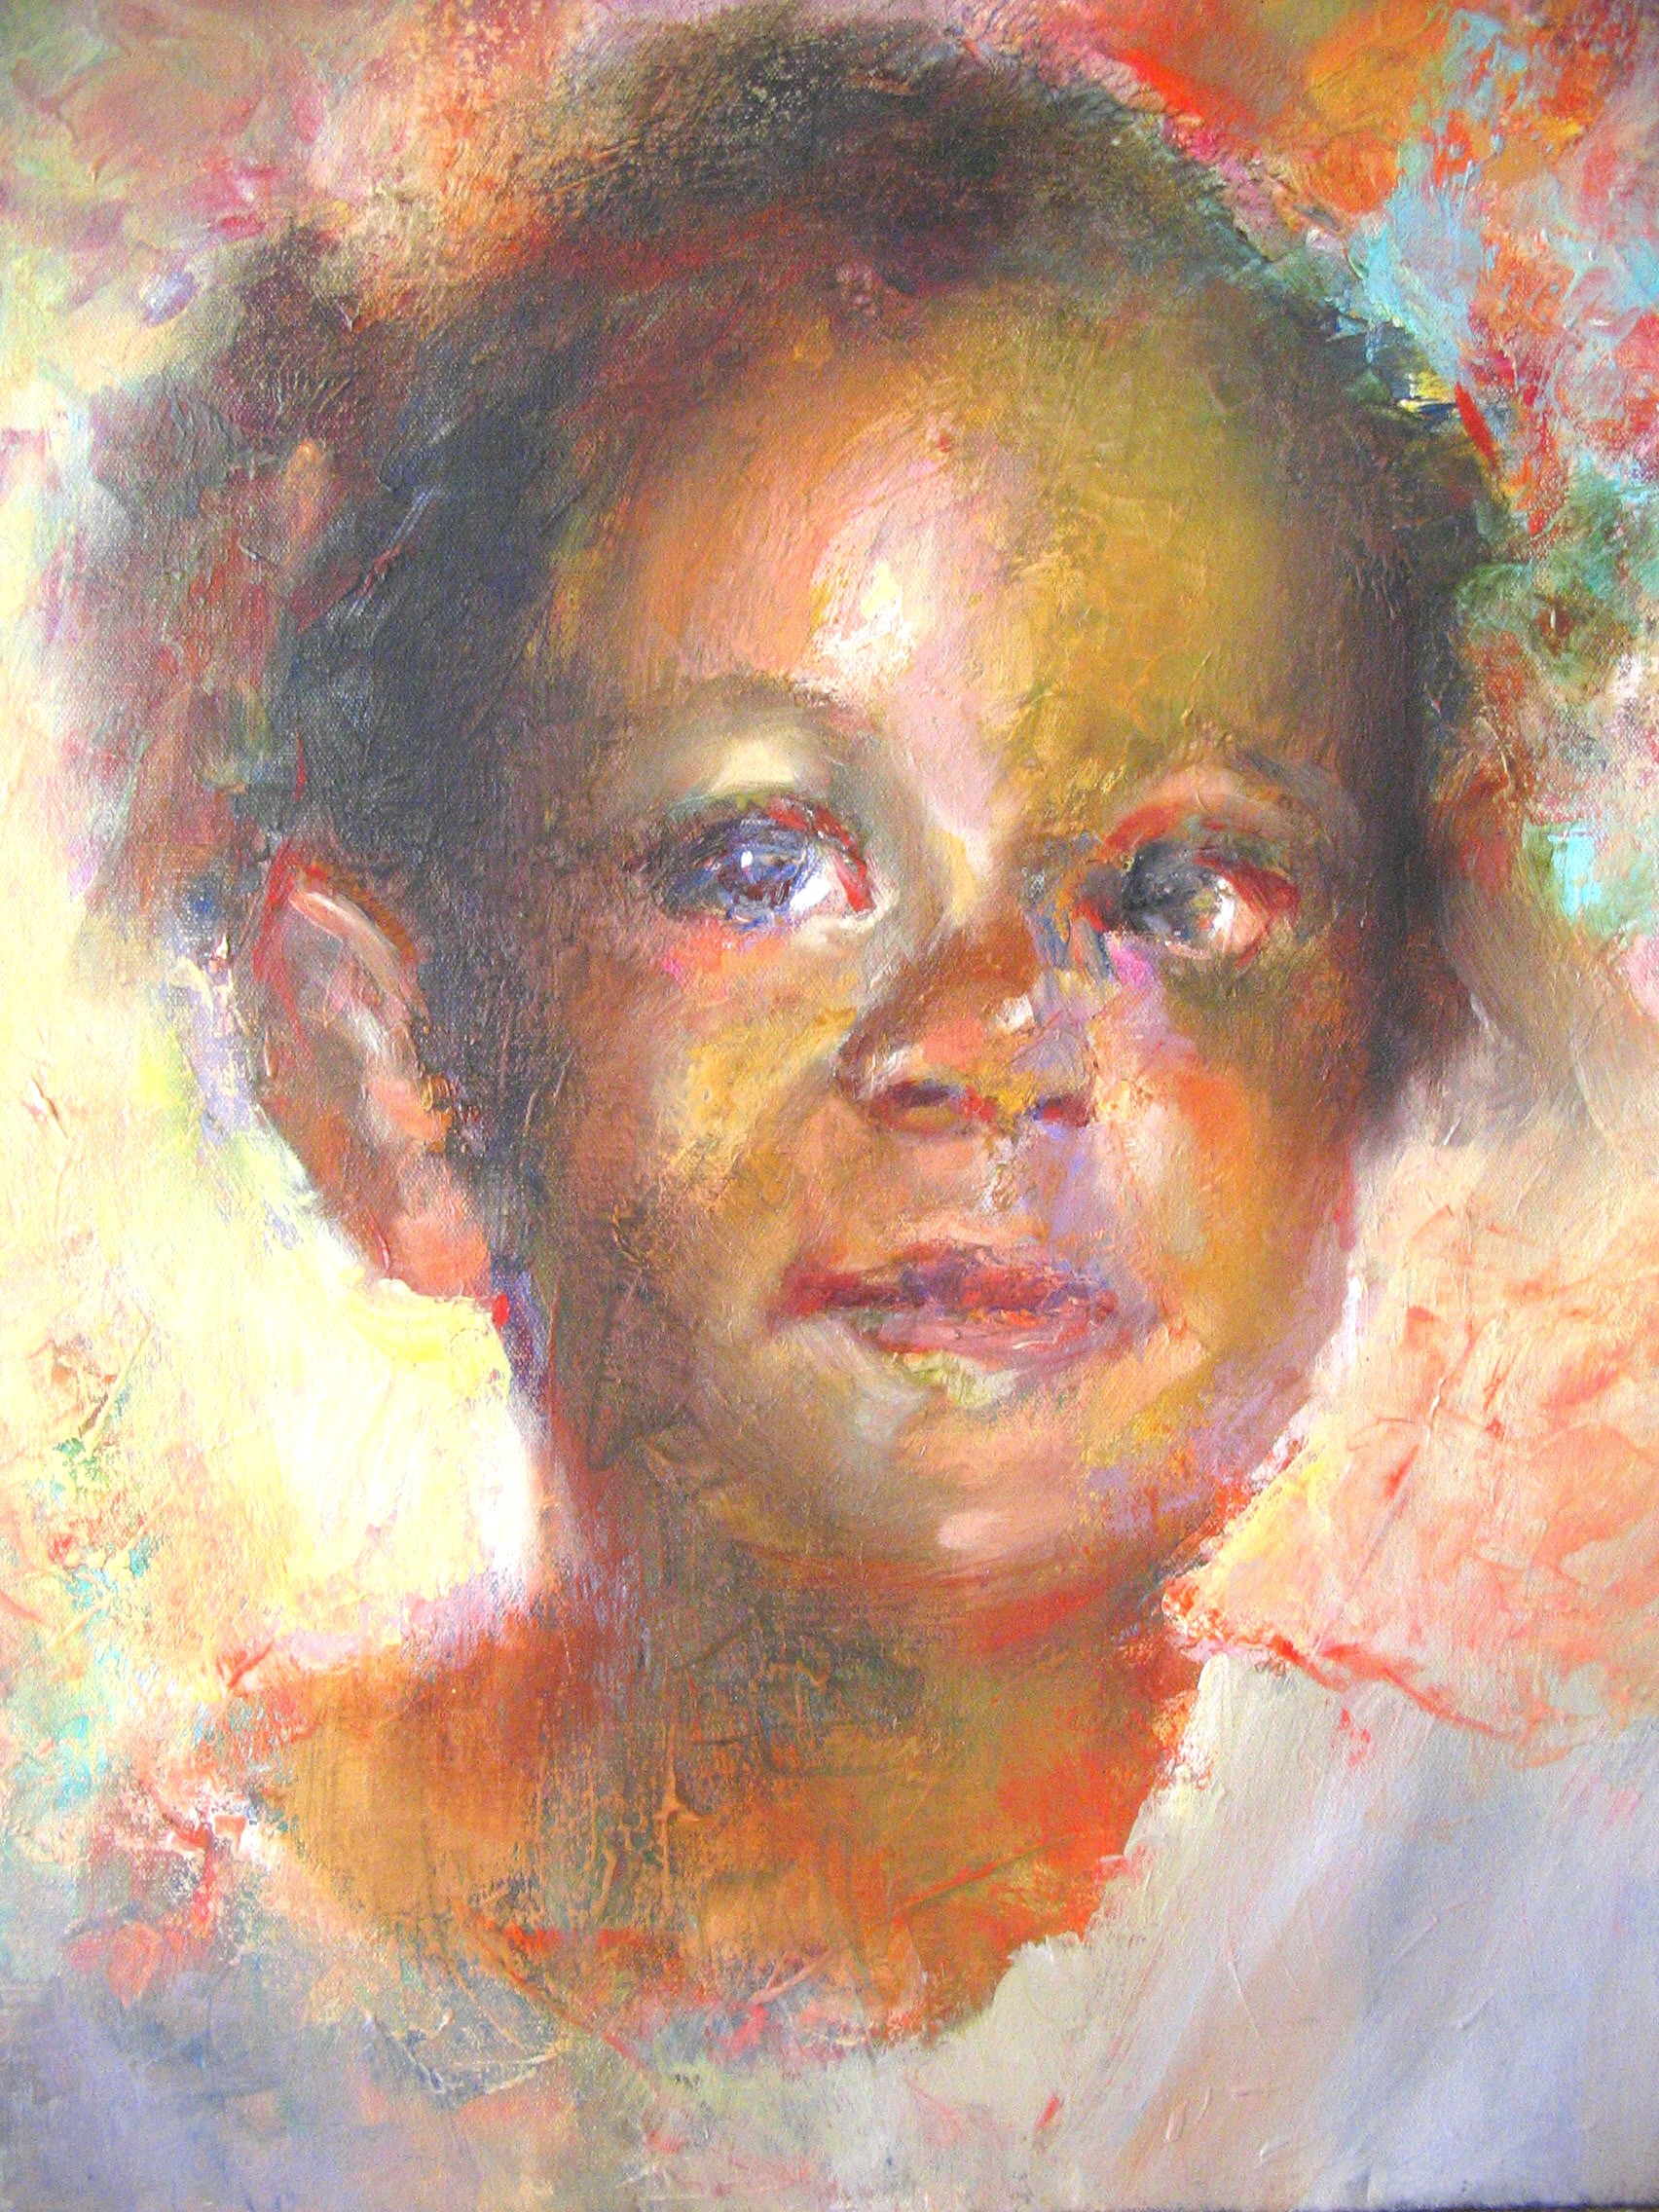 Art Exhibit Features Portraits of Missing Children by Artist John Paul